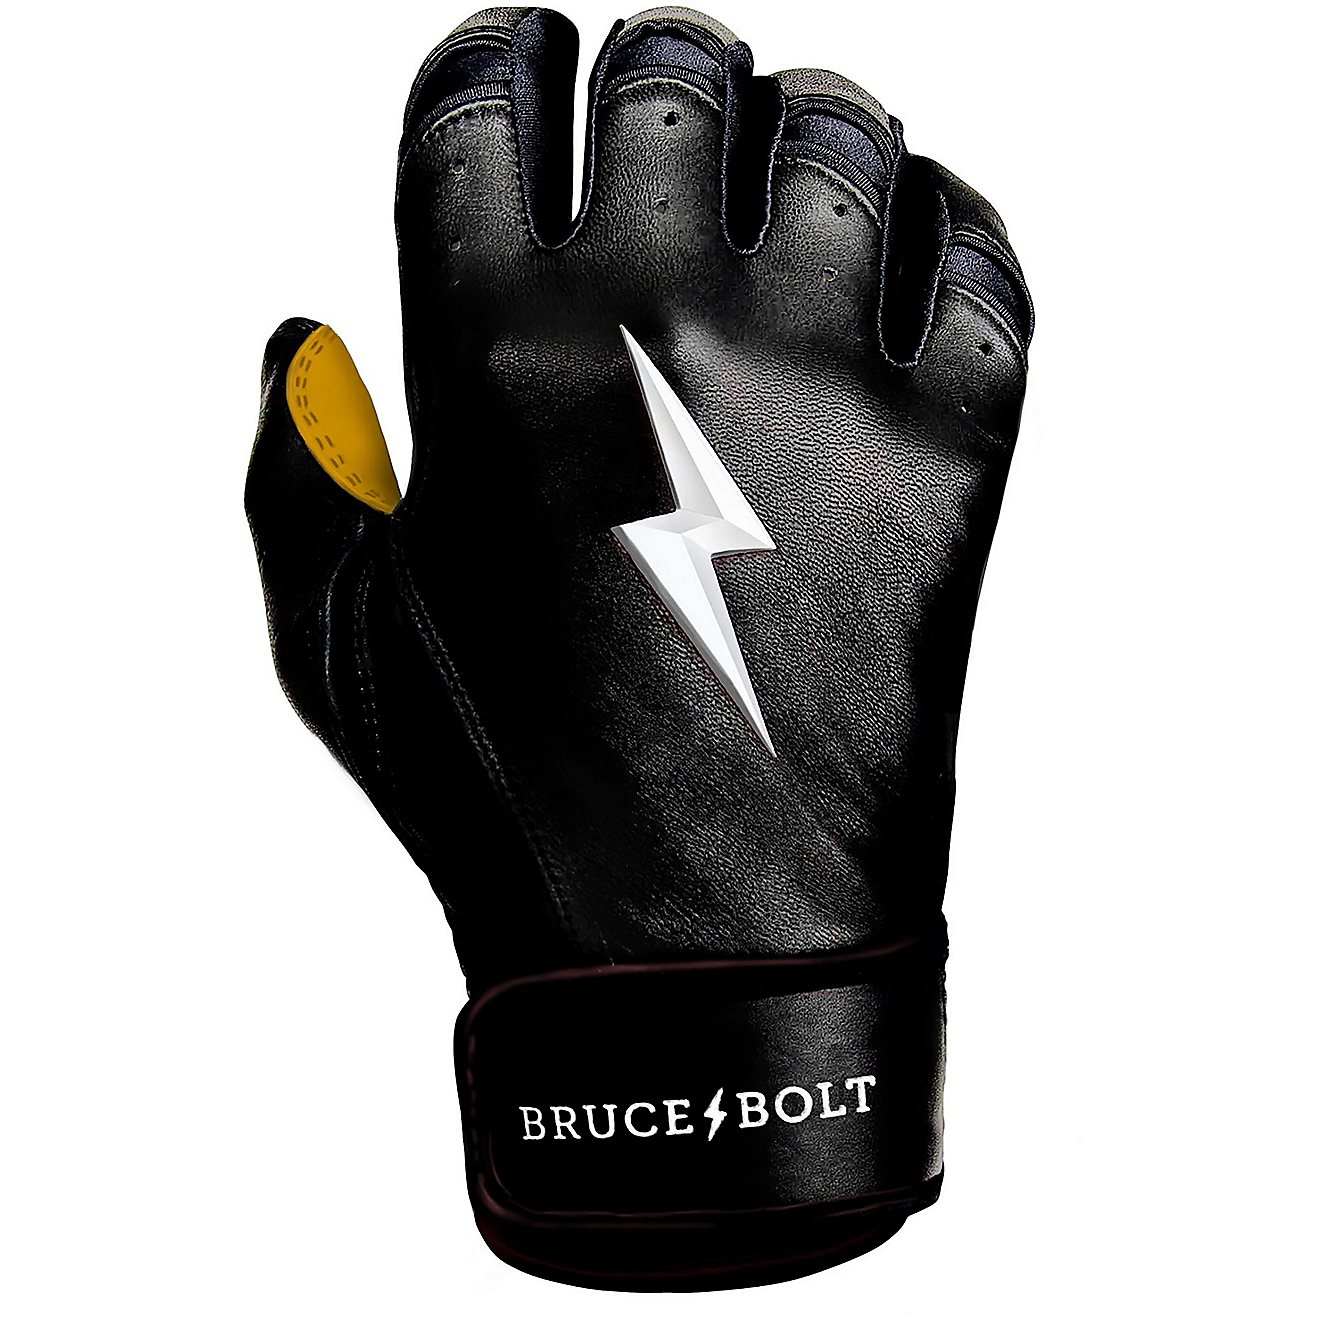 BRUCE BOLT Adults' Premium Pro Short Cuff Batting Gloves                                                                         - view number 2